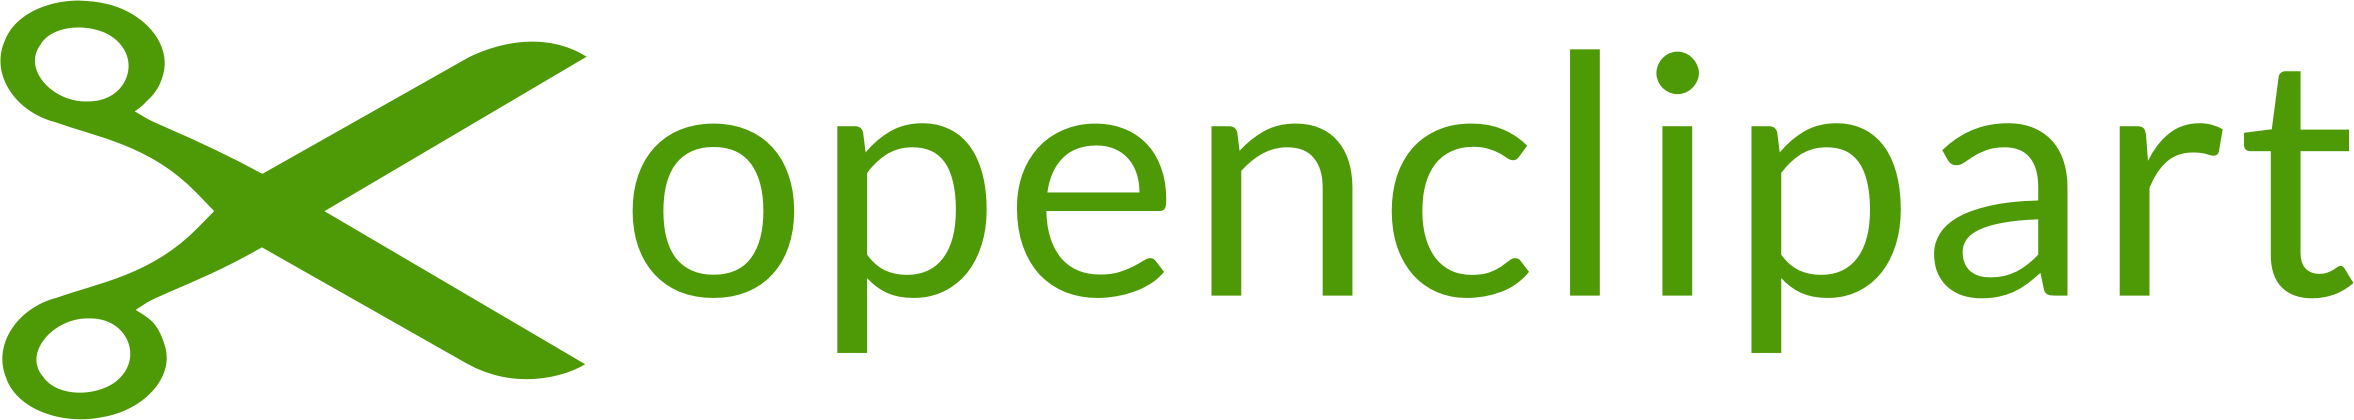 Openclipart Scissors Logo Guide Horizontal By Rejon